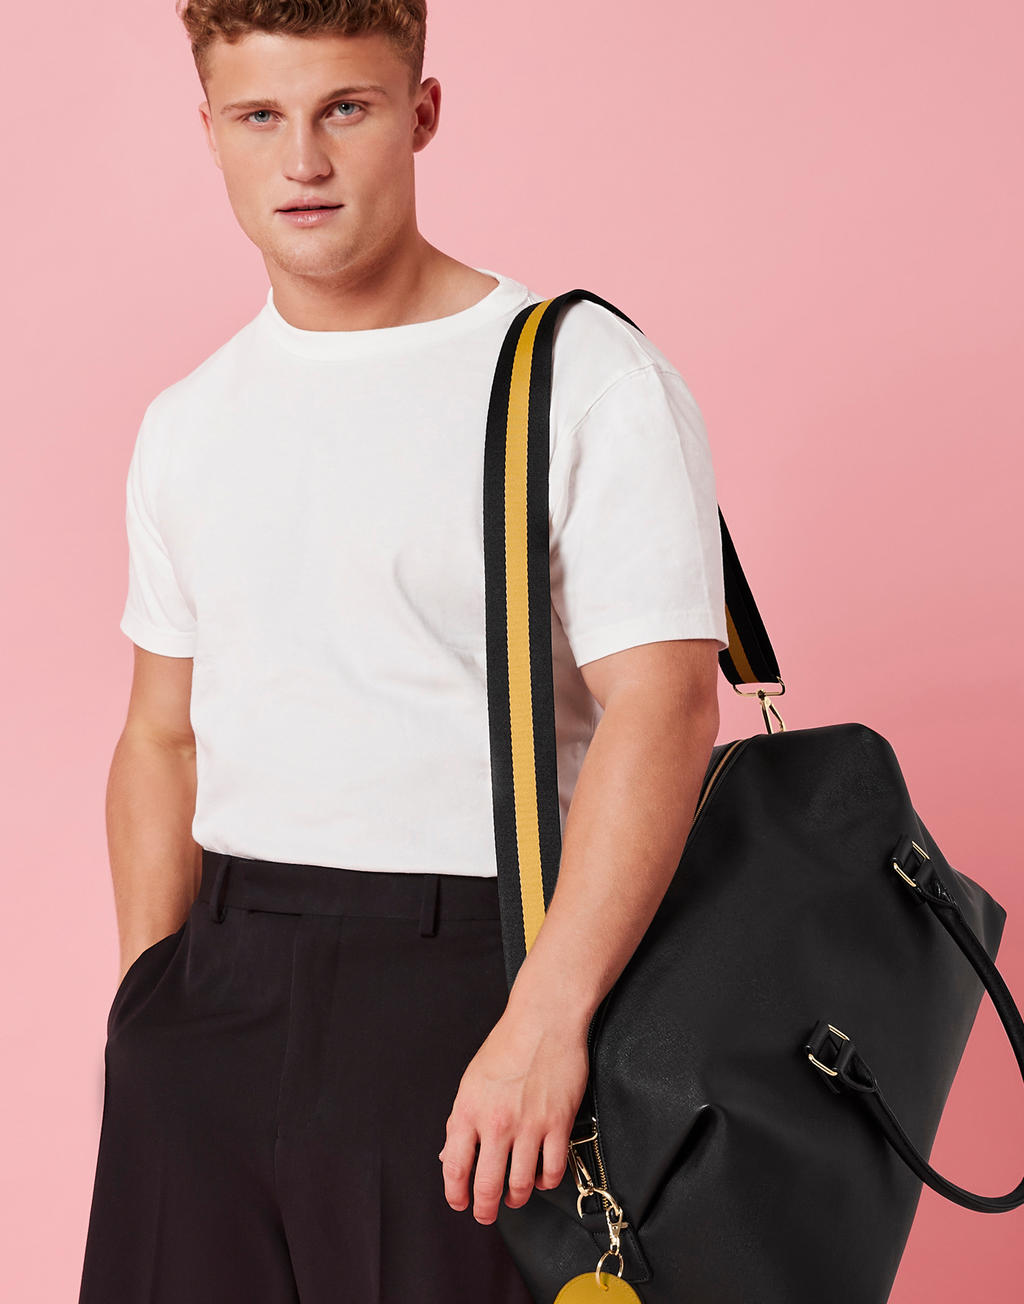  Boutique Adjustable Bag Strap in Farbe Black/White